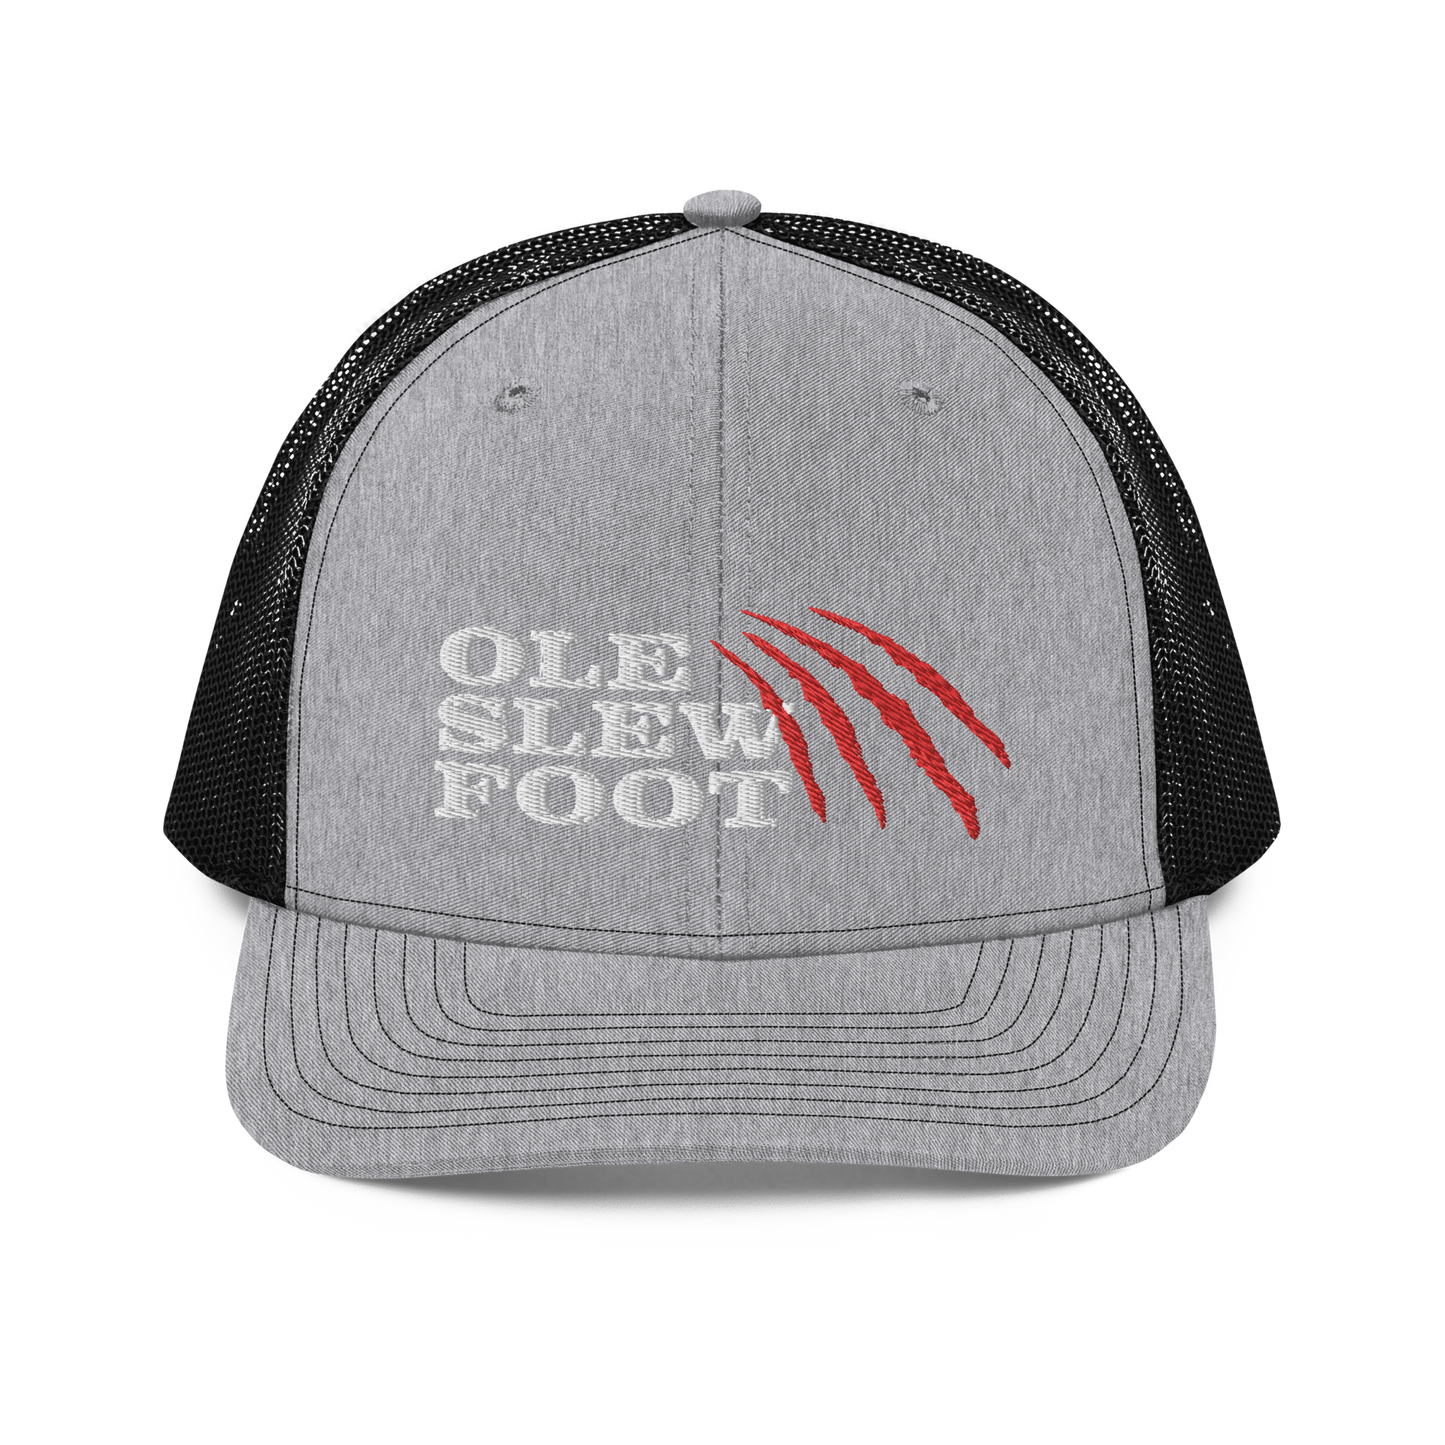 Ole Slew Foot Flat Embroidery | Snapback Trucker Cap | Richardson 112